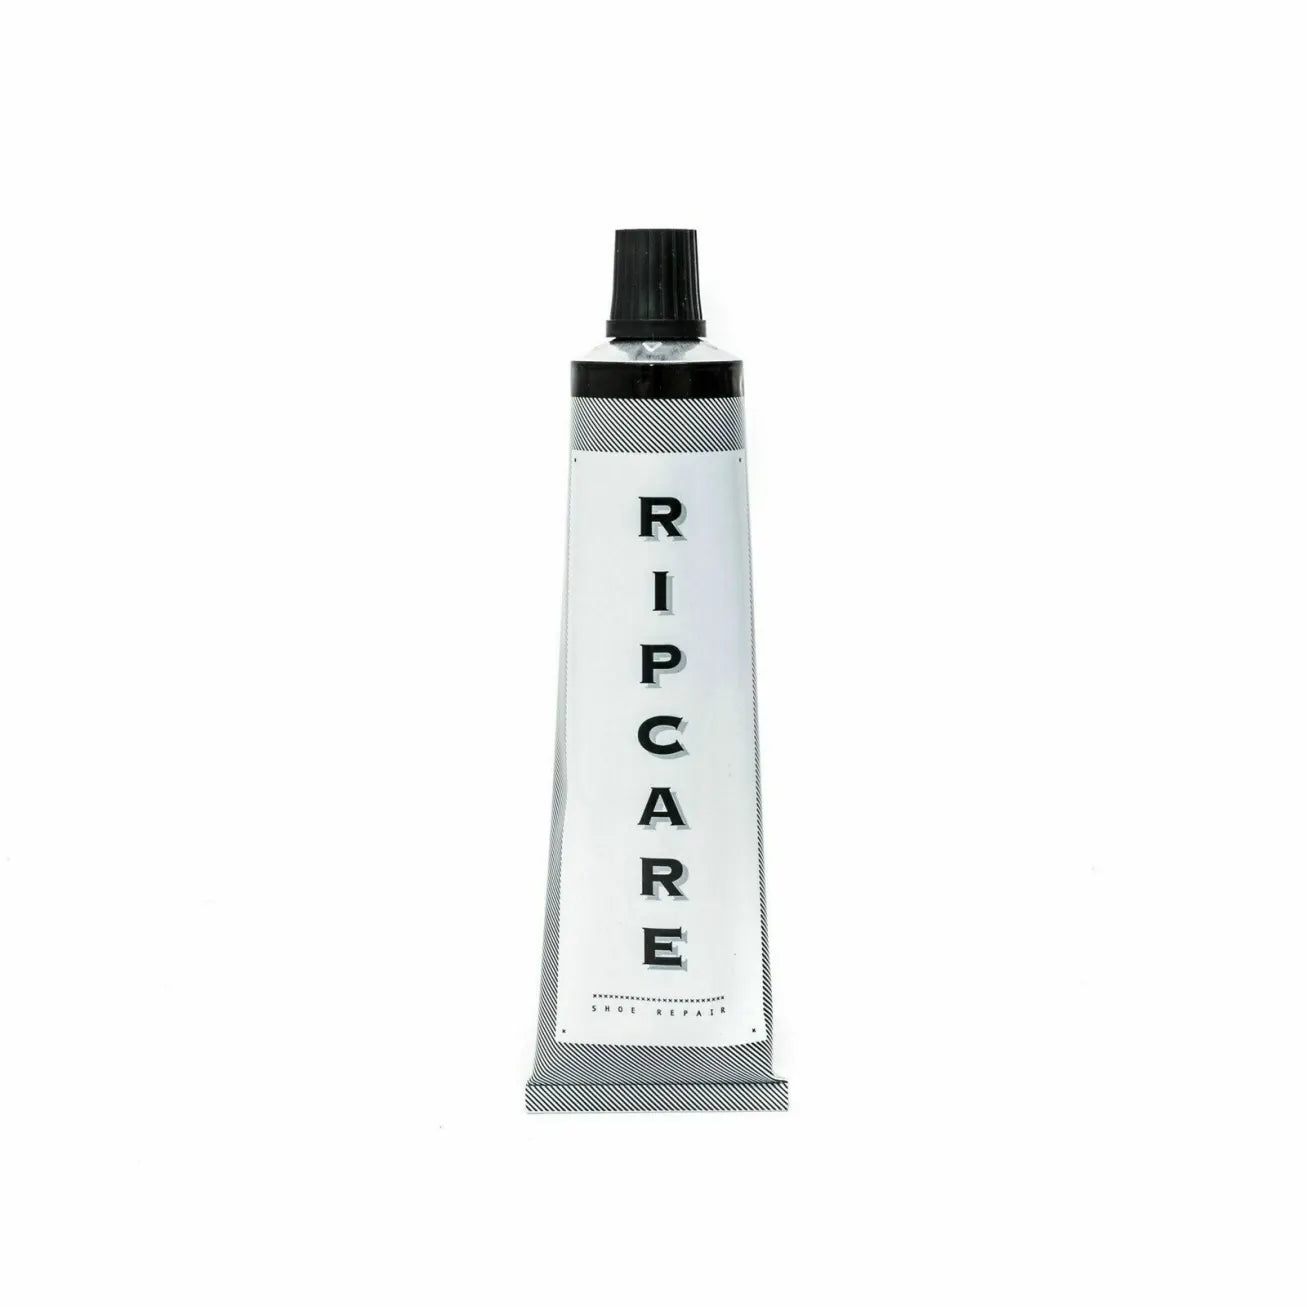 Ripcare - Shoe repair glue